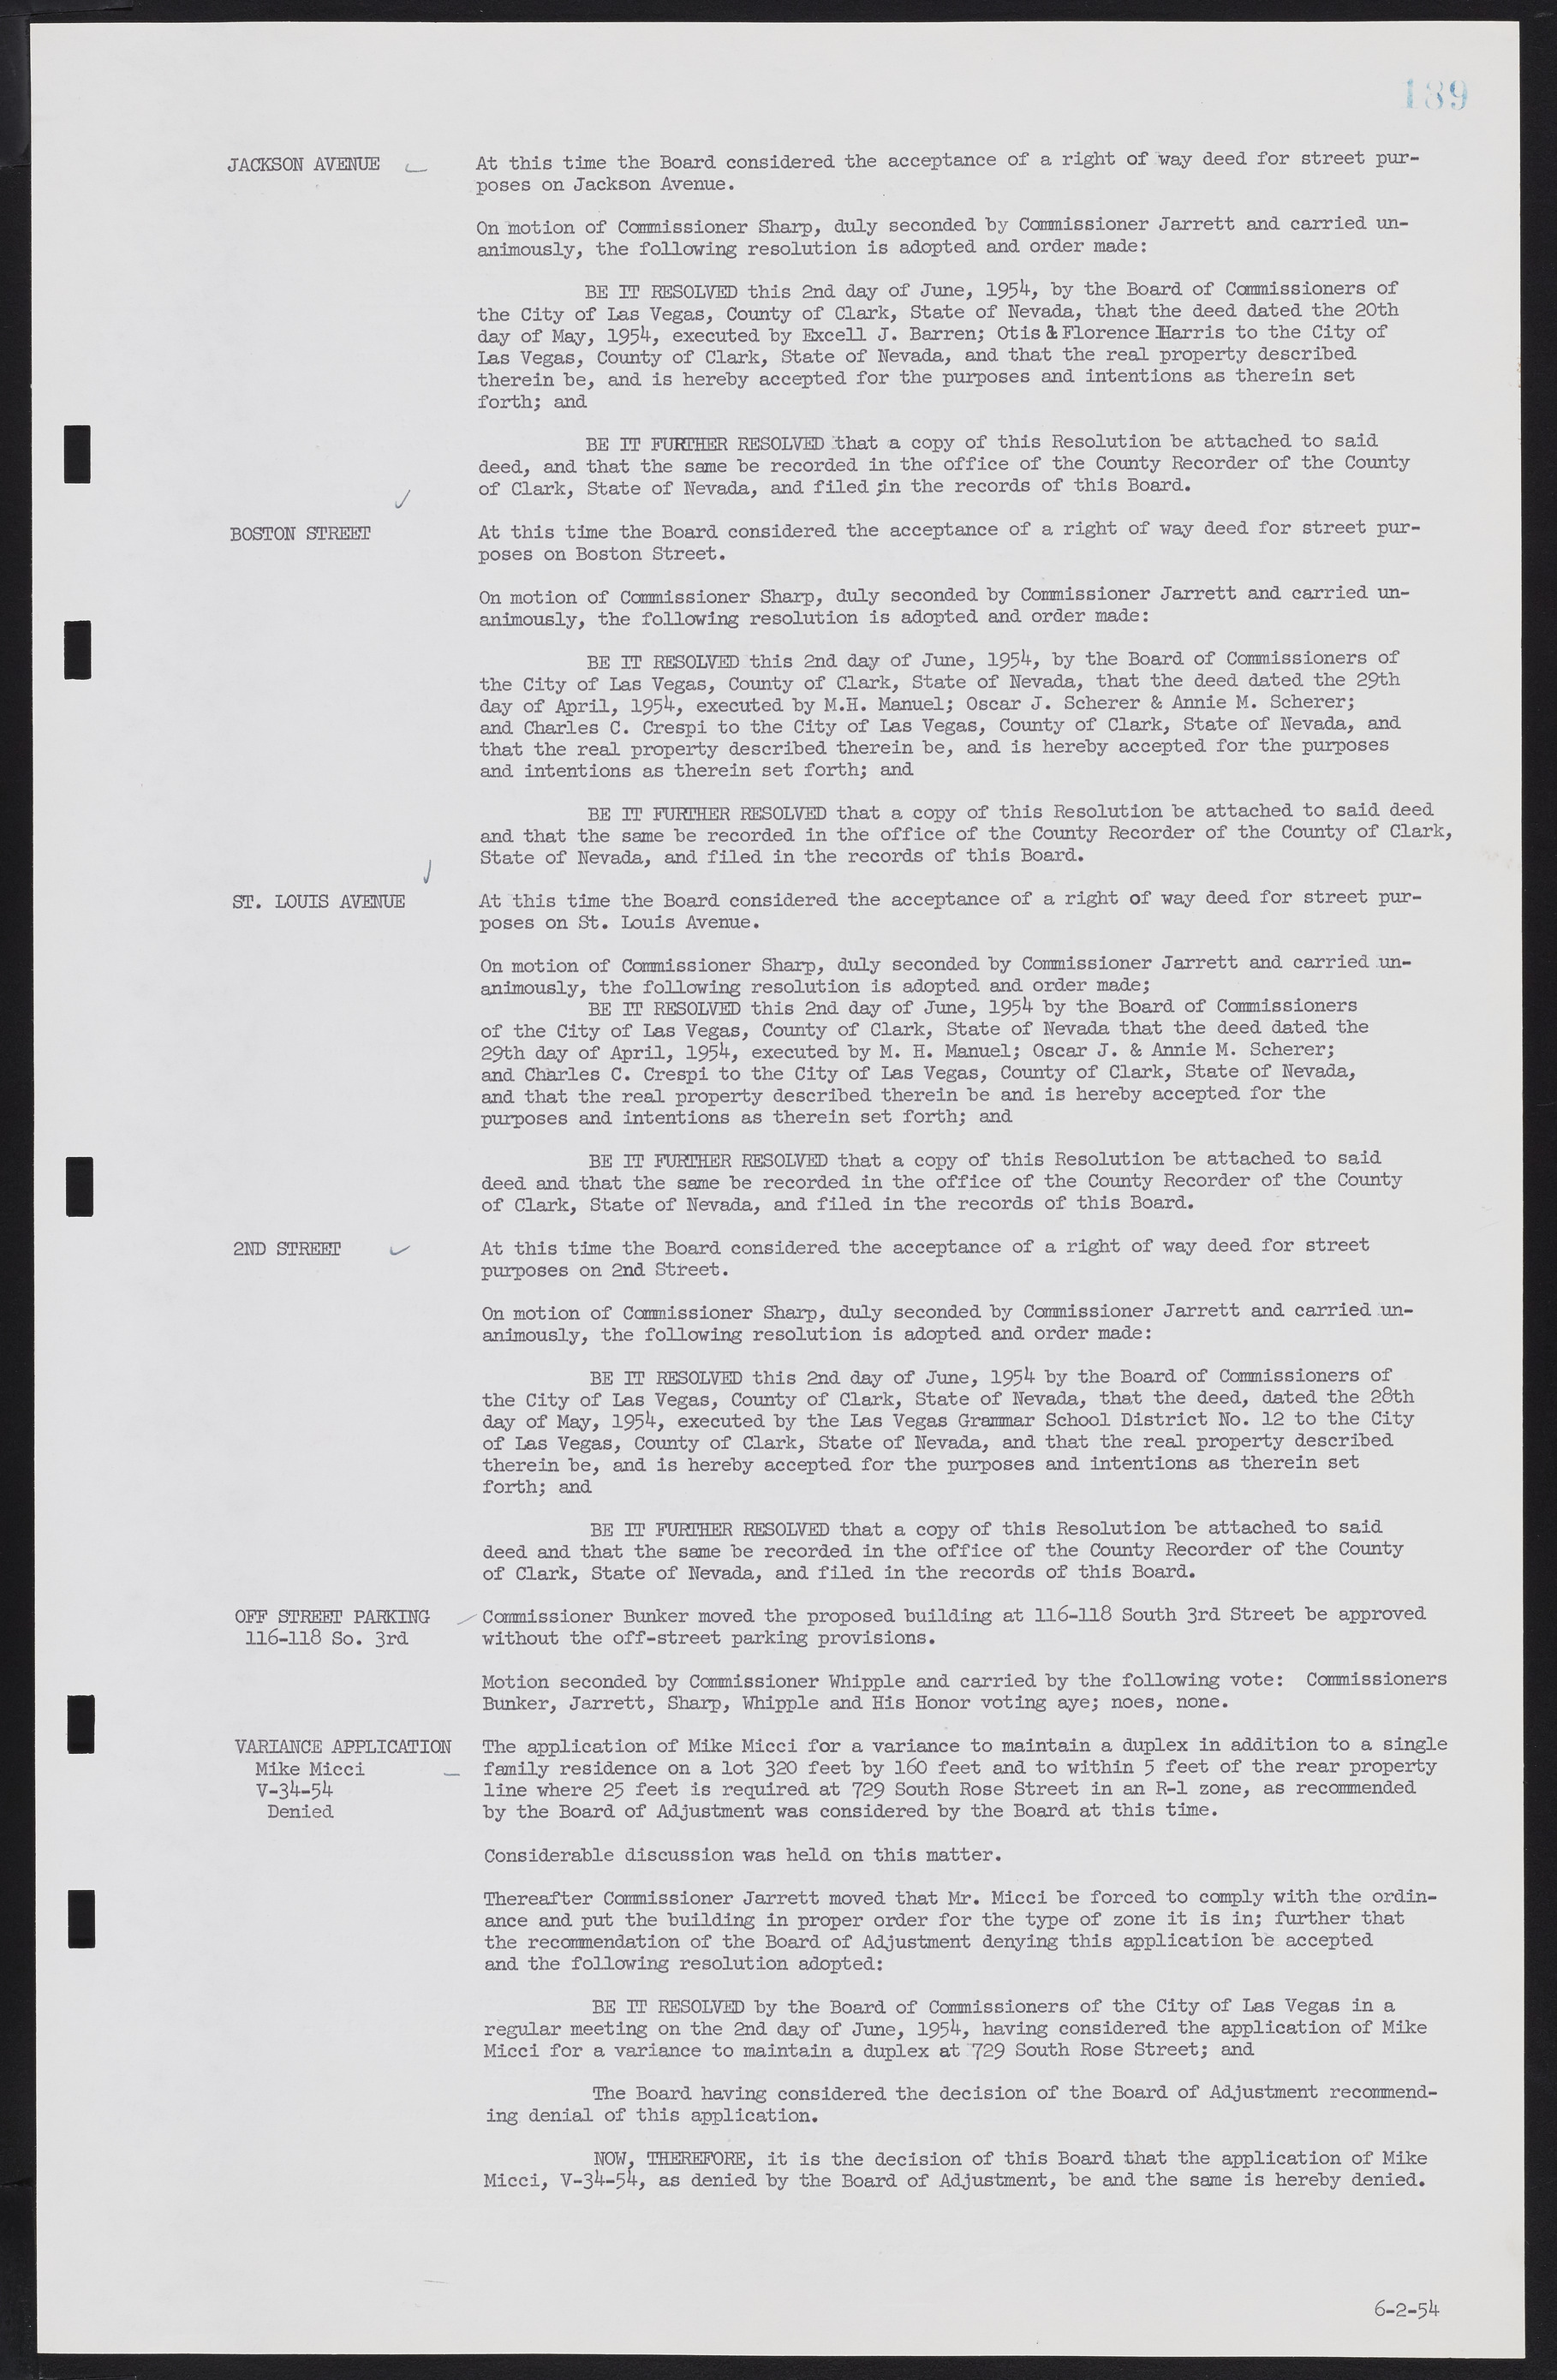 Las Vegas City Commission Minutes, February 17, 1954 to September 21, 1955, lvc000009-195